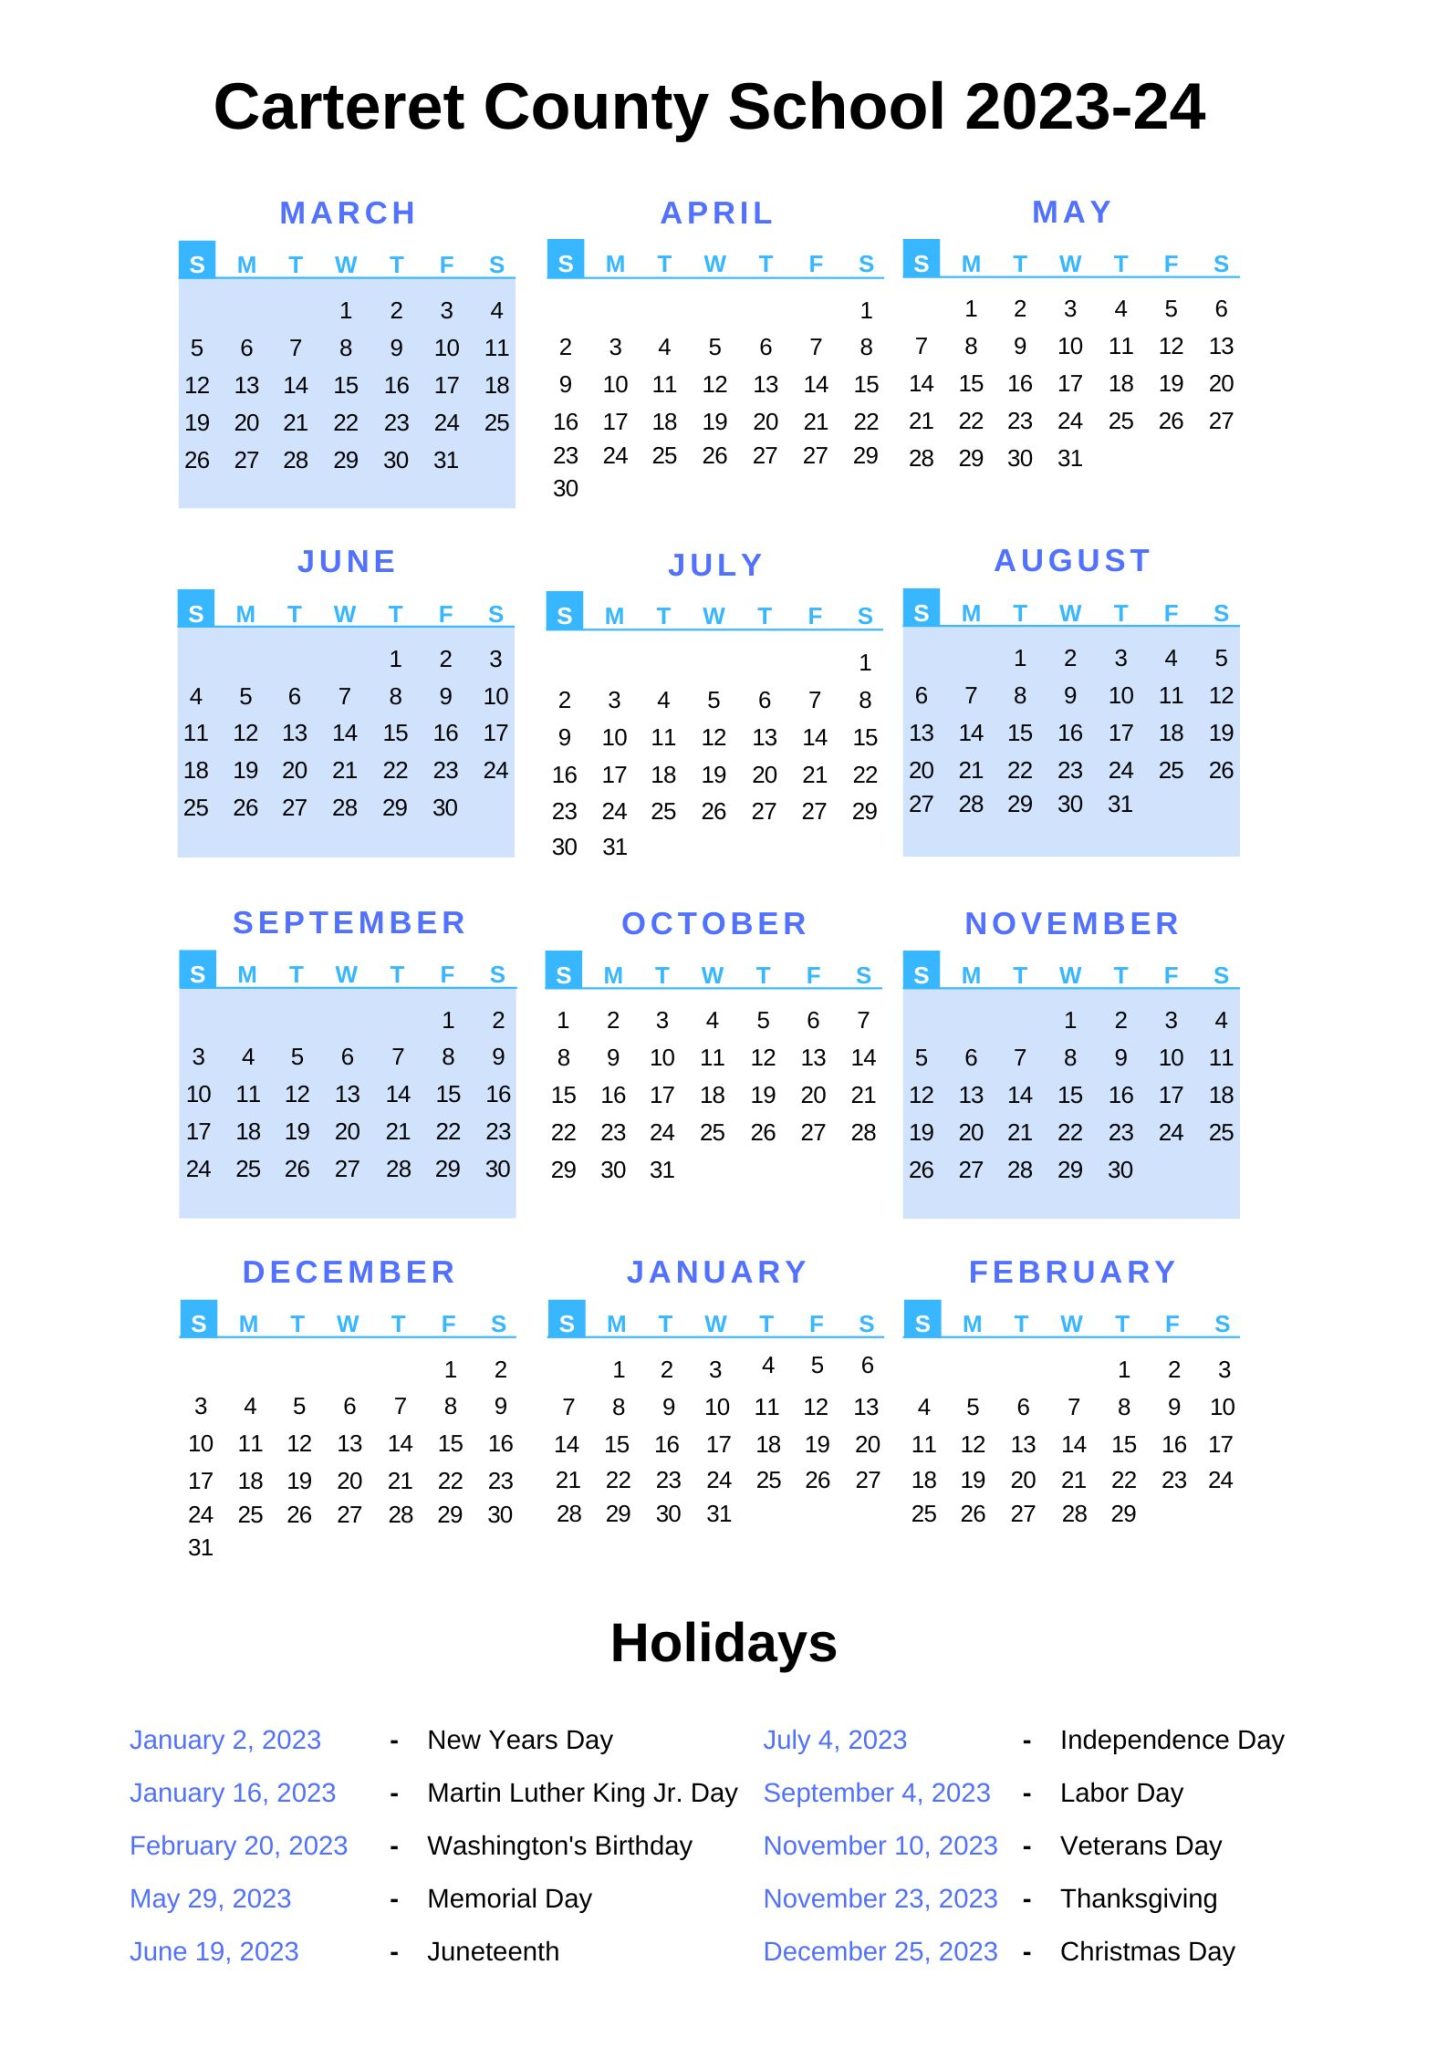 Carteret County Schools Calendar CCS 2023 24 With Holidays